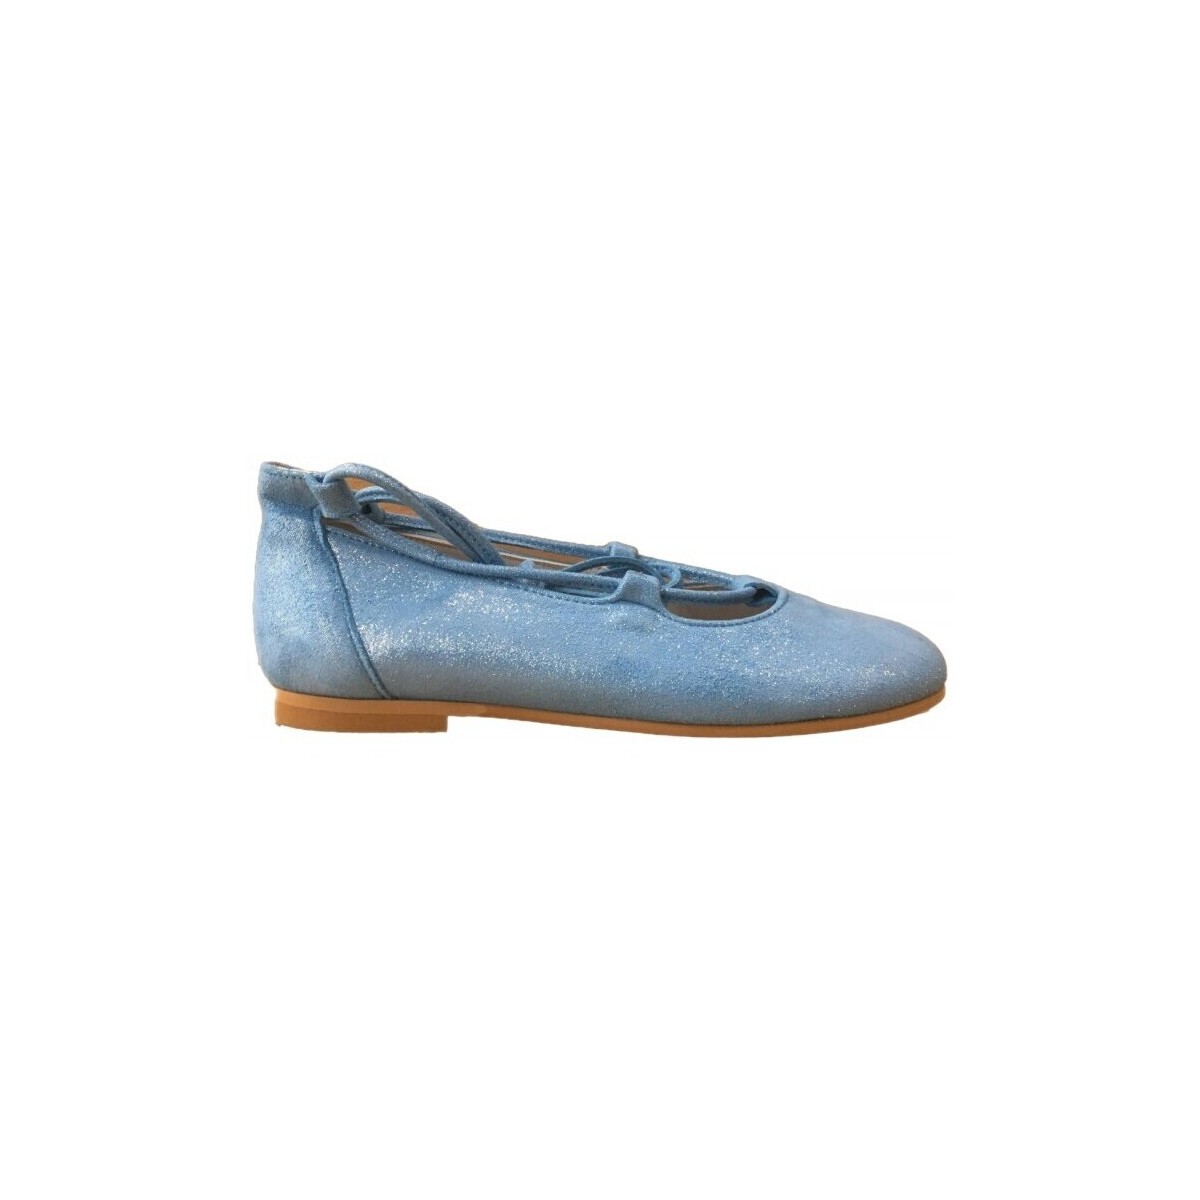 Chaussures Fille Ballerines / babies Colores 26228-18 Bleu